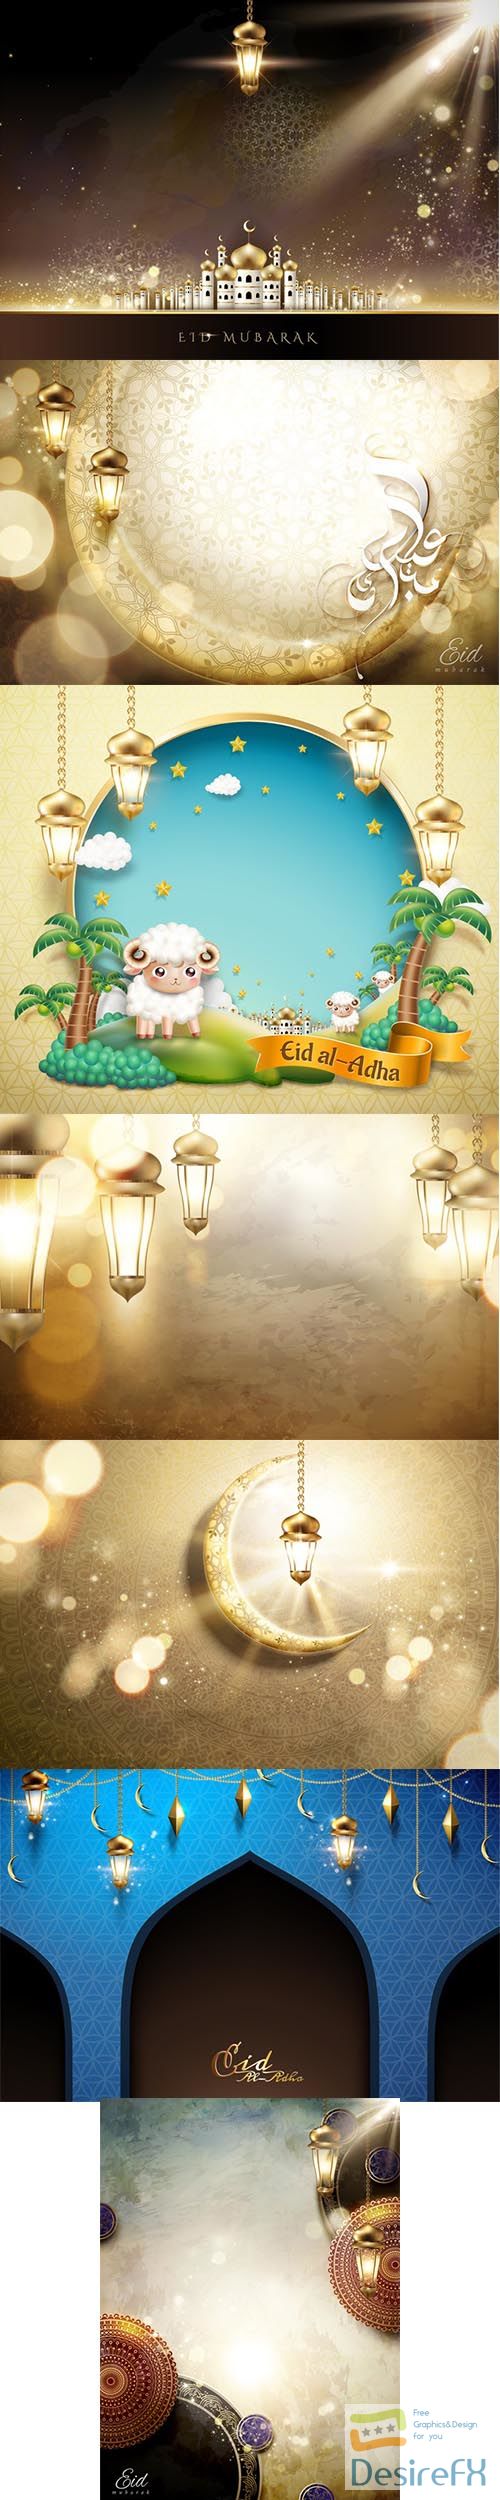 Eid al adha design with hanging lanterns